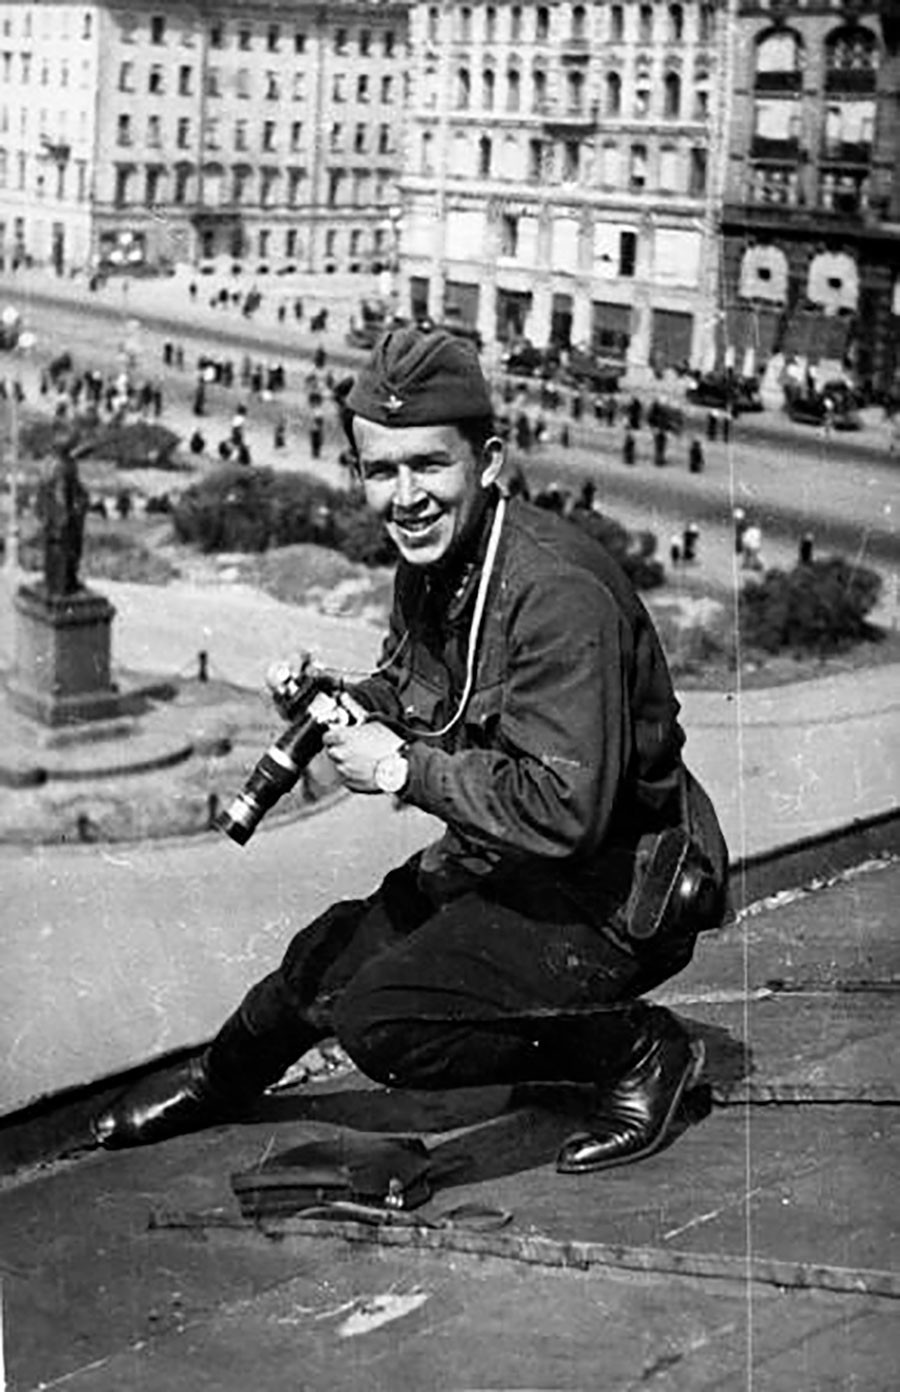 Vsevolod Tarasevich at work in Leningrad, 1942